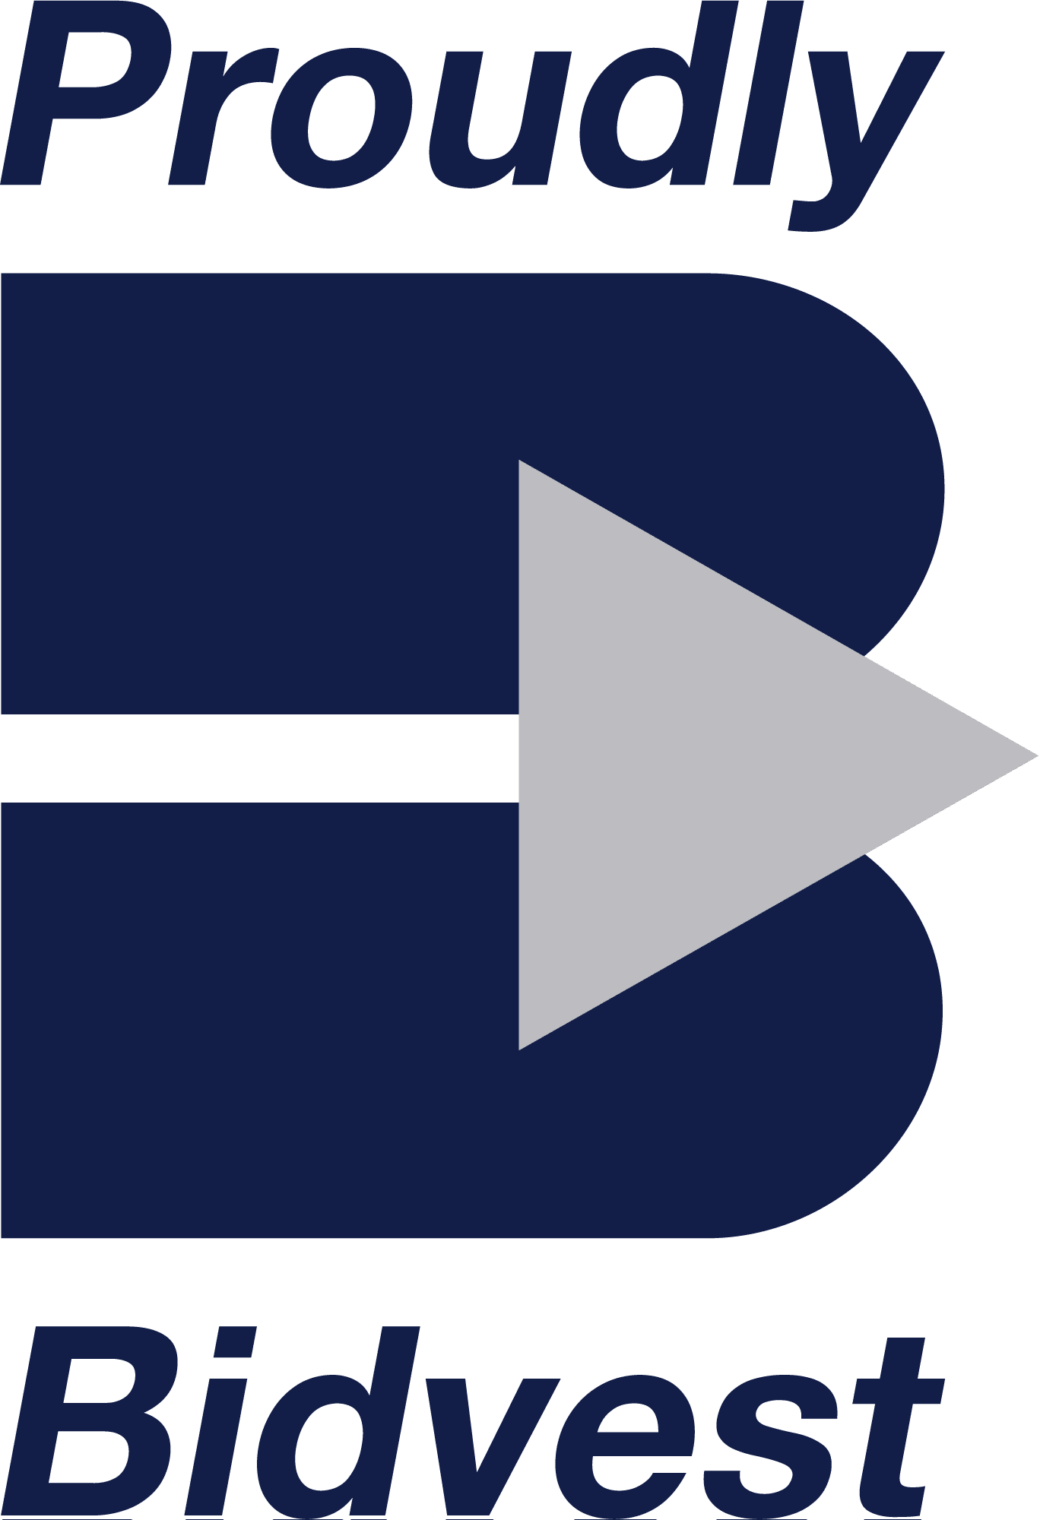 Bidvest_Blue-logo